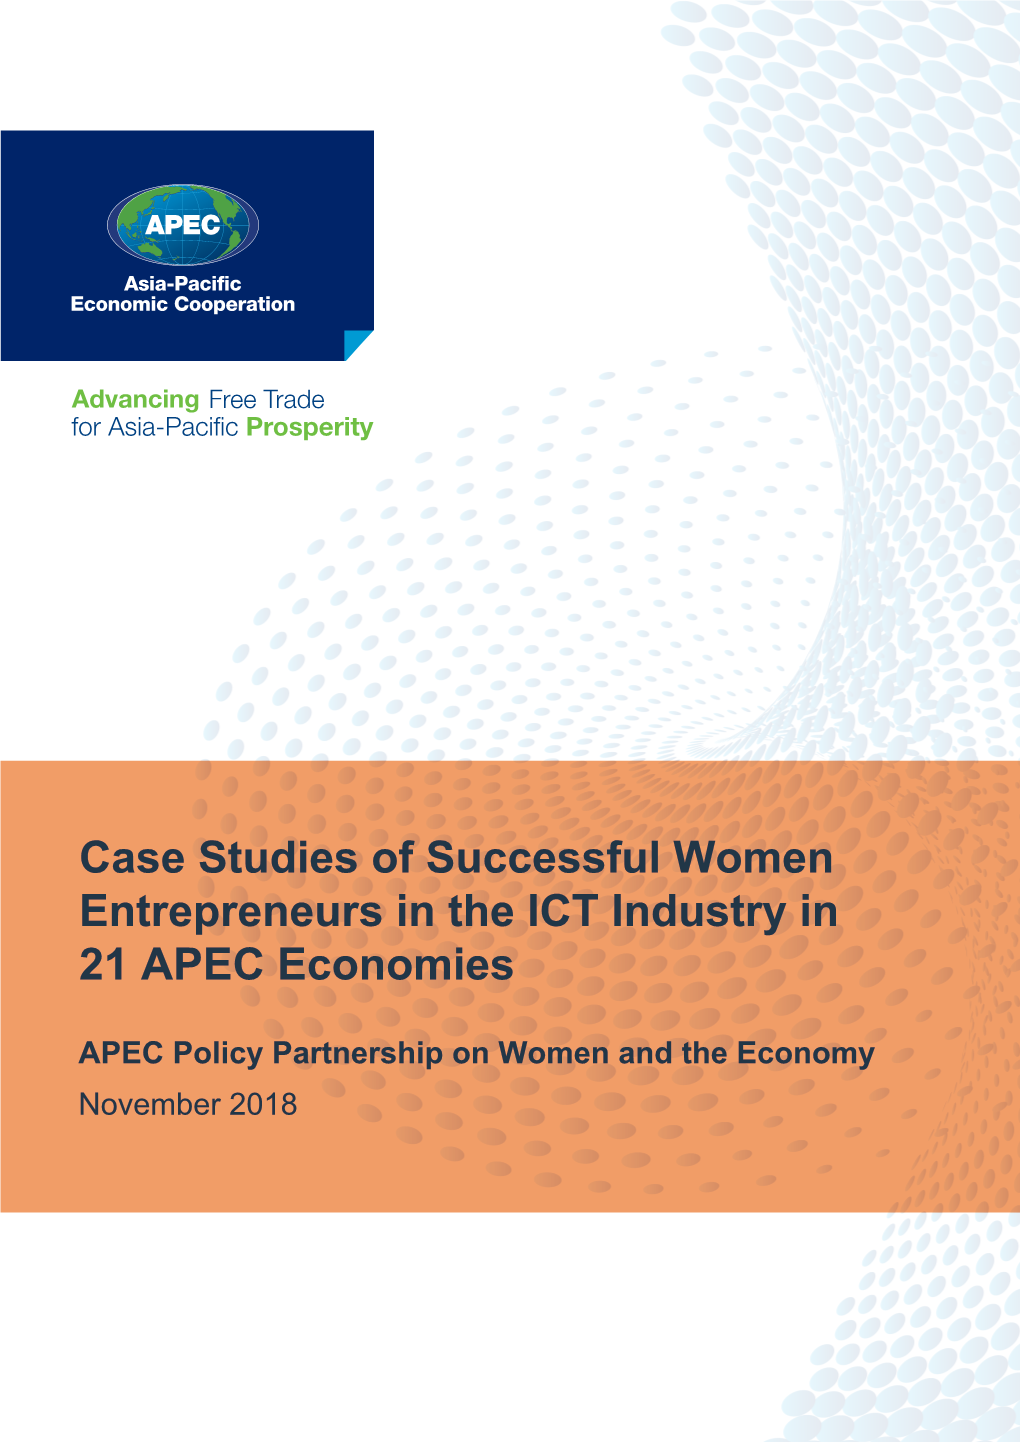 Case Studies of Successful Women Entrepreneurs in the ICT Industry in 21 APEC Economies